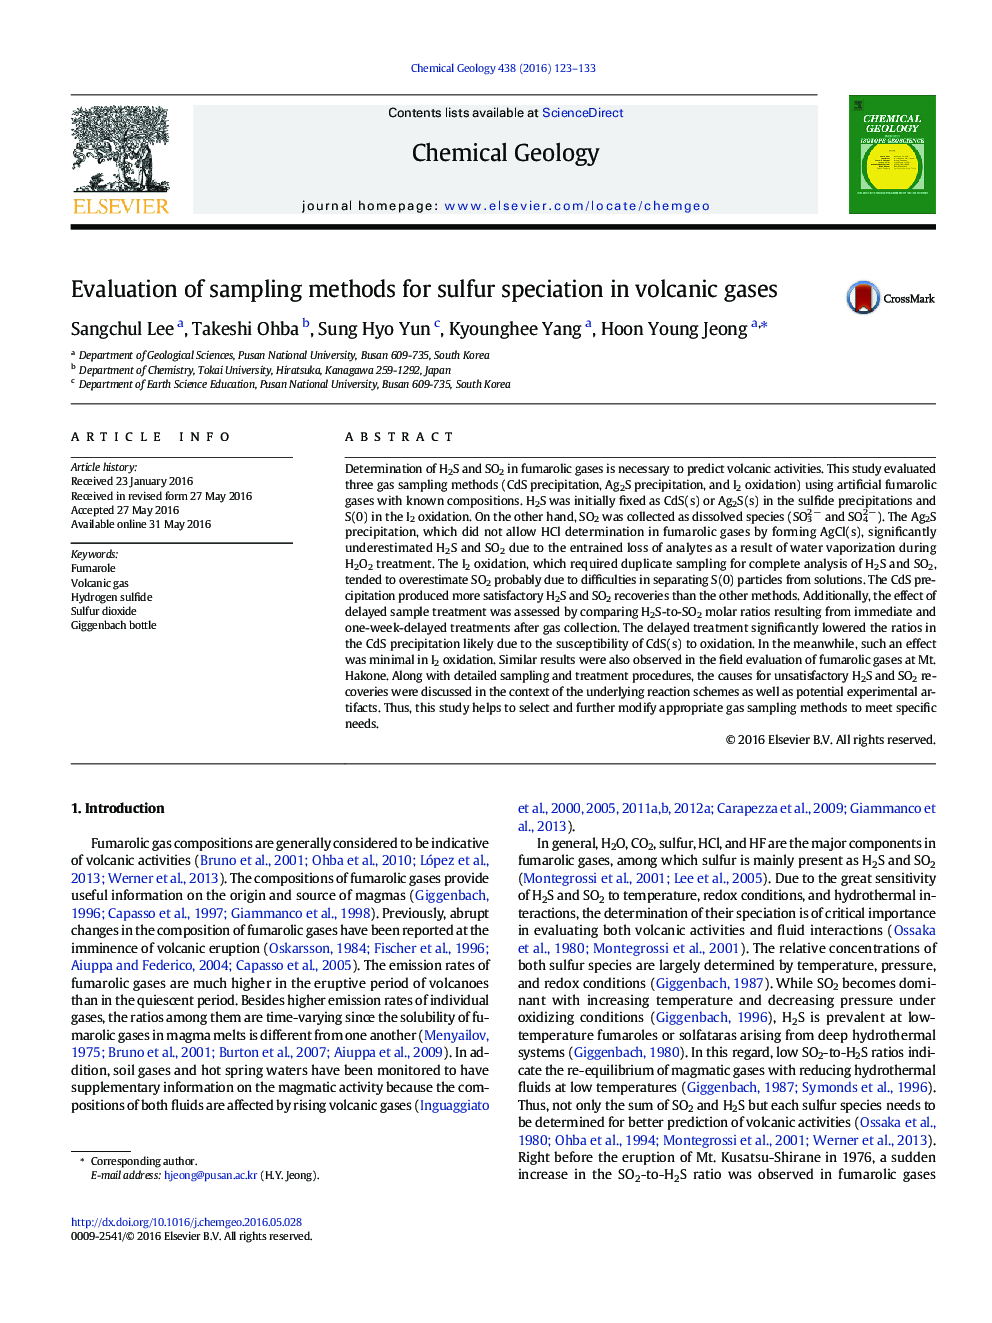 Evaluation of sampling methods for sulfur speciation in volcanic gases